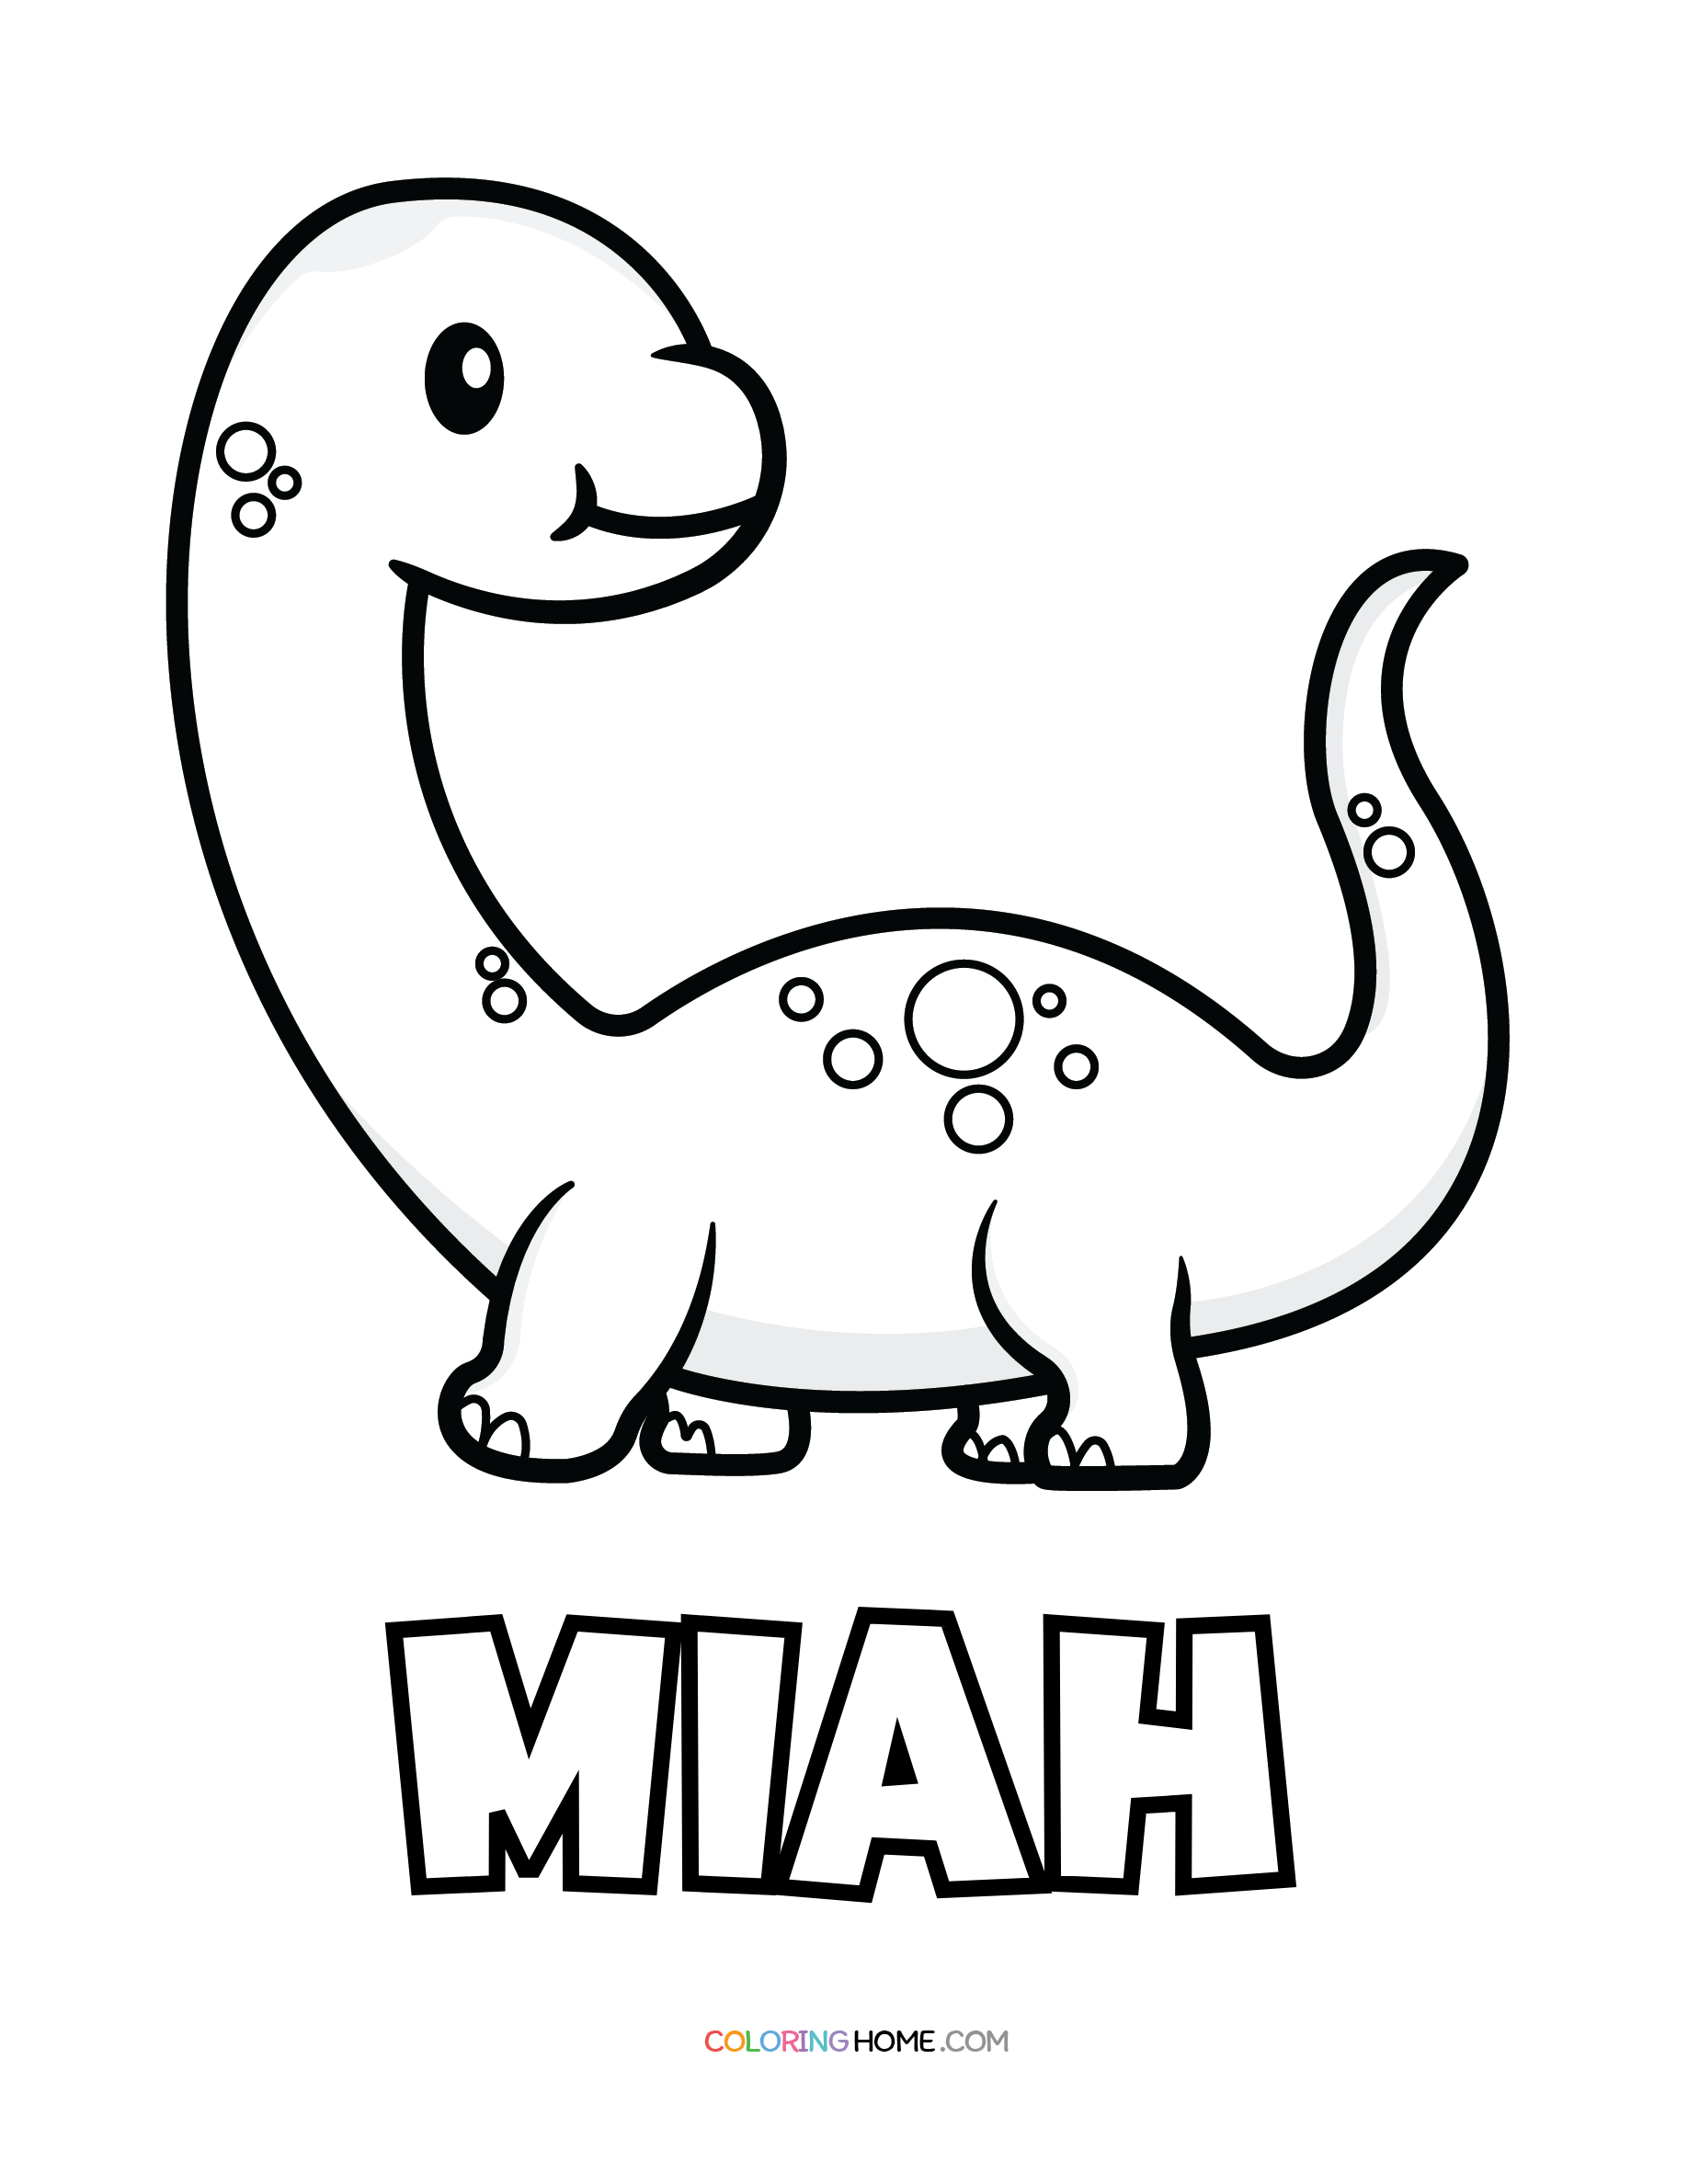 Miah dinosaur coloring page